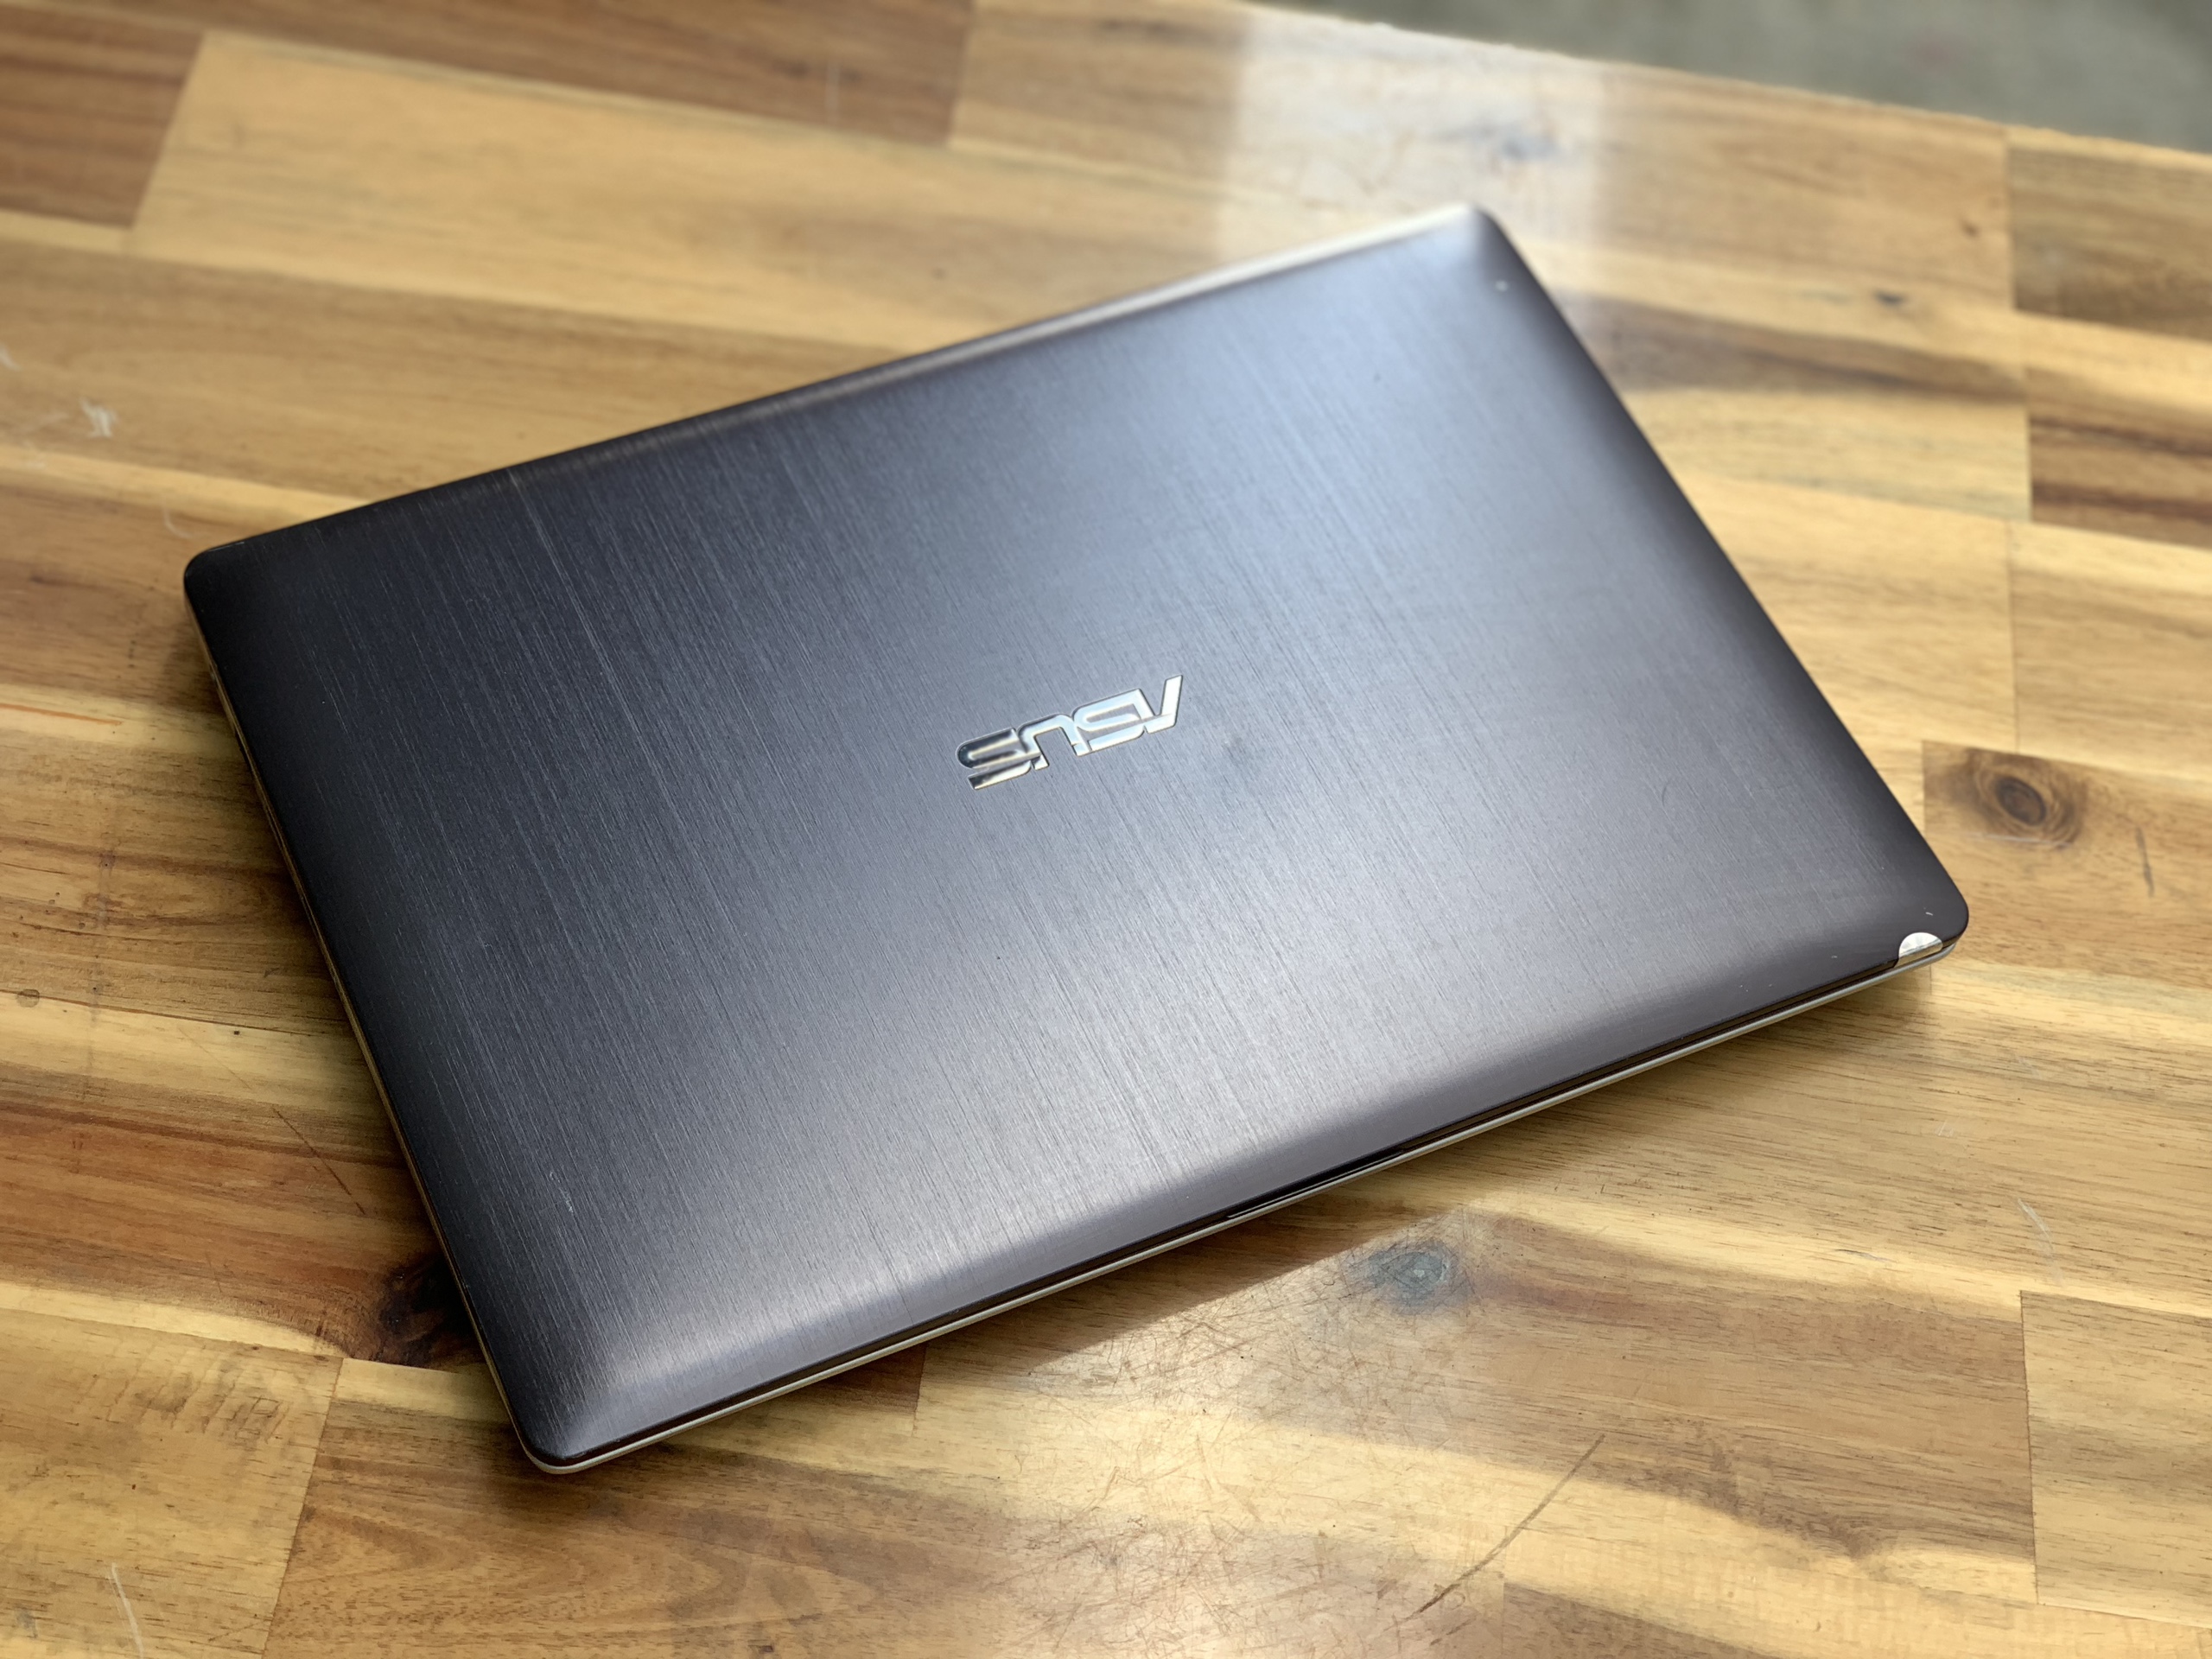 Laptop Asus Vivobook S301LA, i5 4200U 4G SS128 Cảm ứng 13in đẹp zin 100% Giá rẻ3